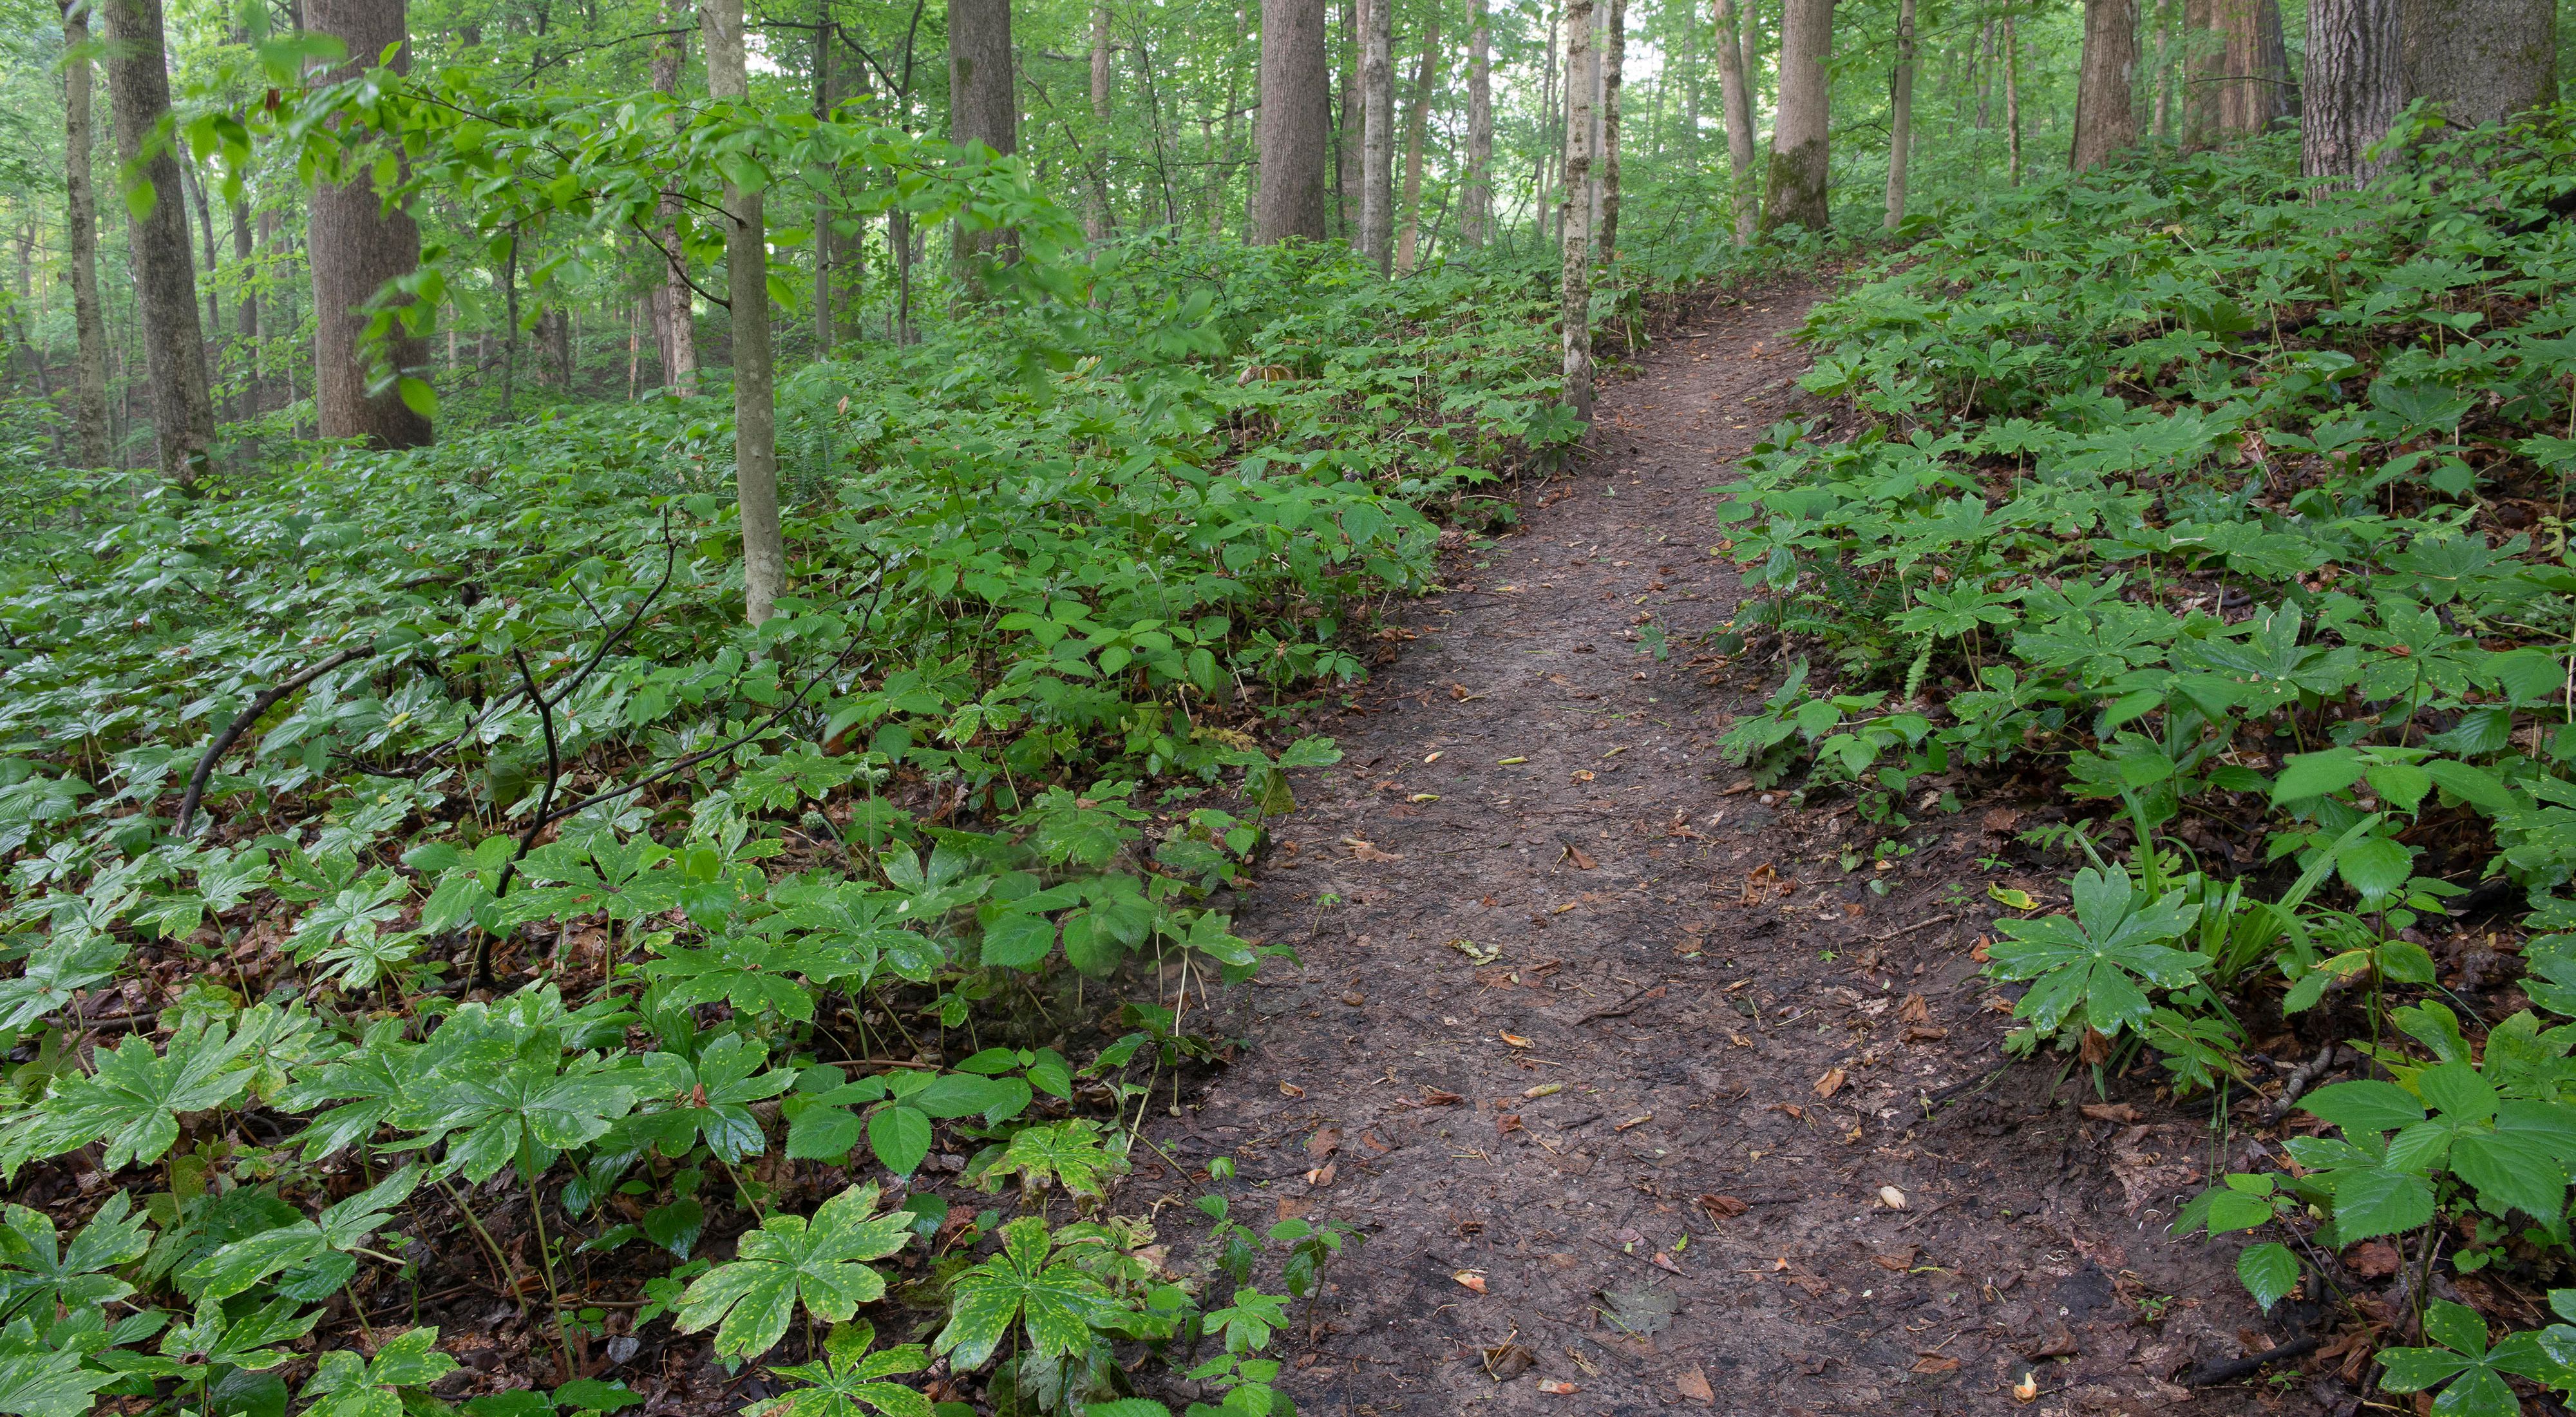 Trail runs through springtime plants in green forest.